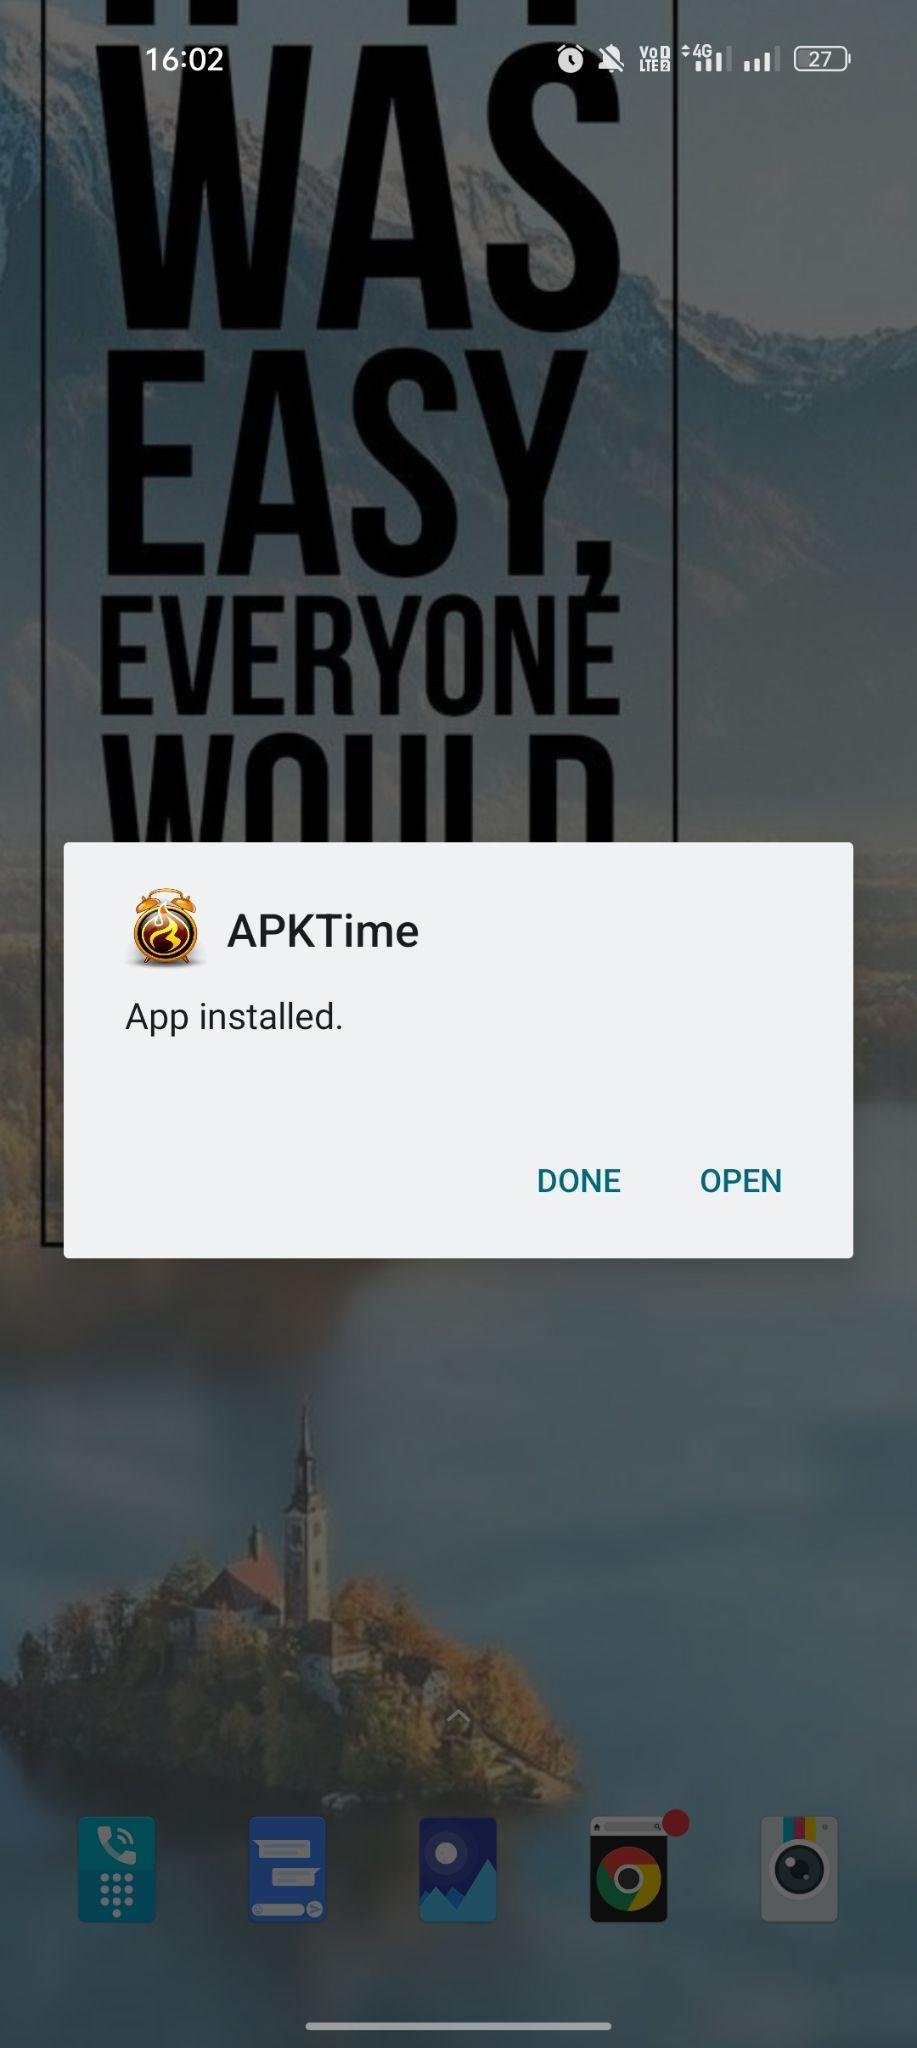 APKTime apk installed